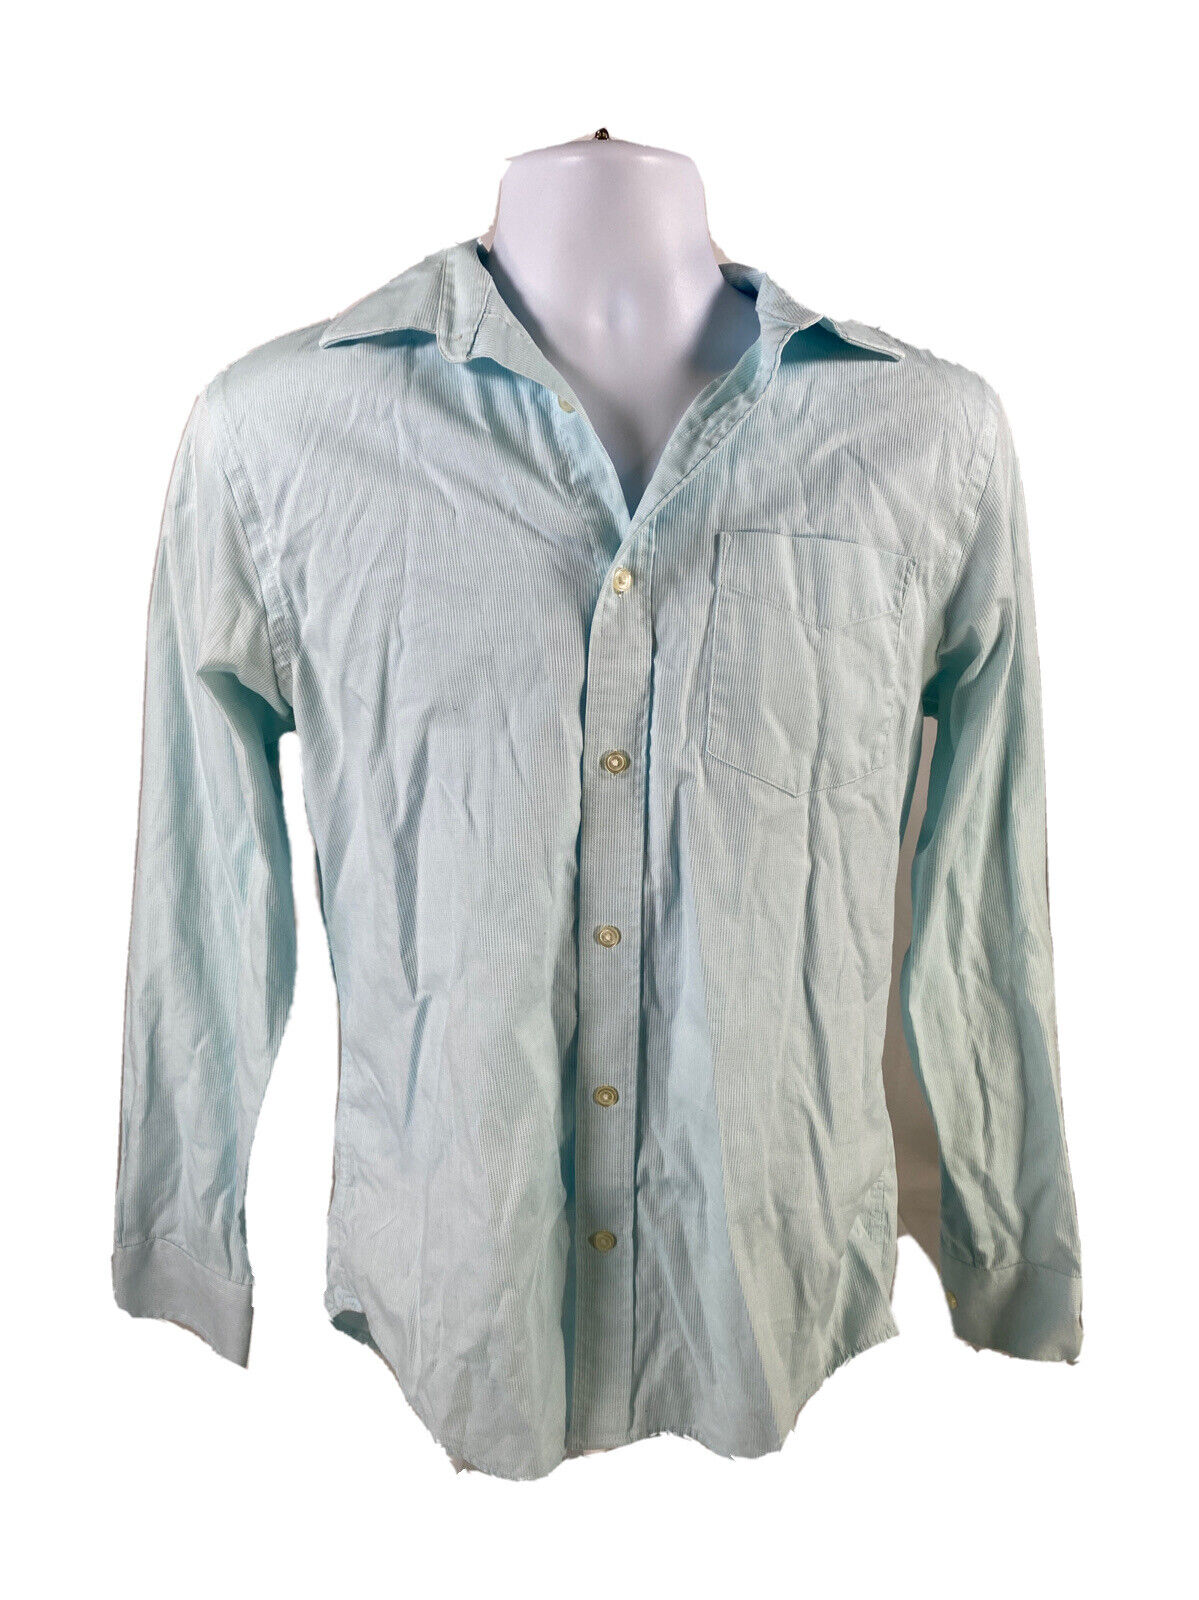 Banana Republic Men's Blue Non-Iron Classic Fit Button Up Shirt -S (32-33)